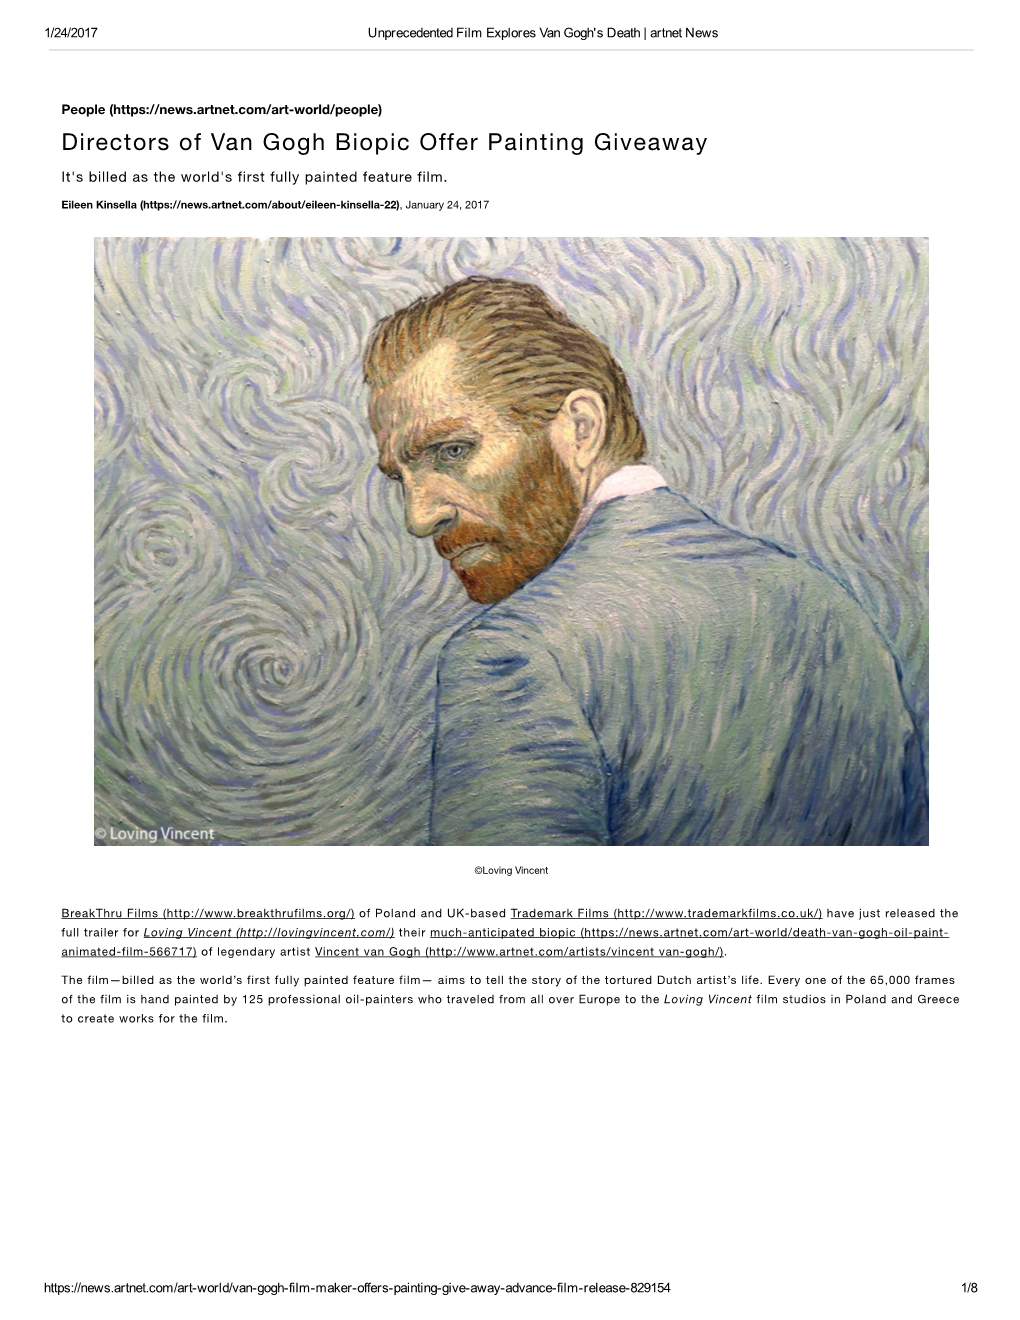 Directors of Van Gogh Biopic Offer Painting Giveaway